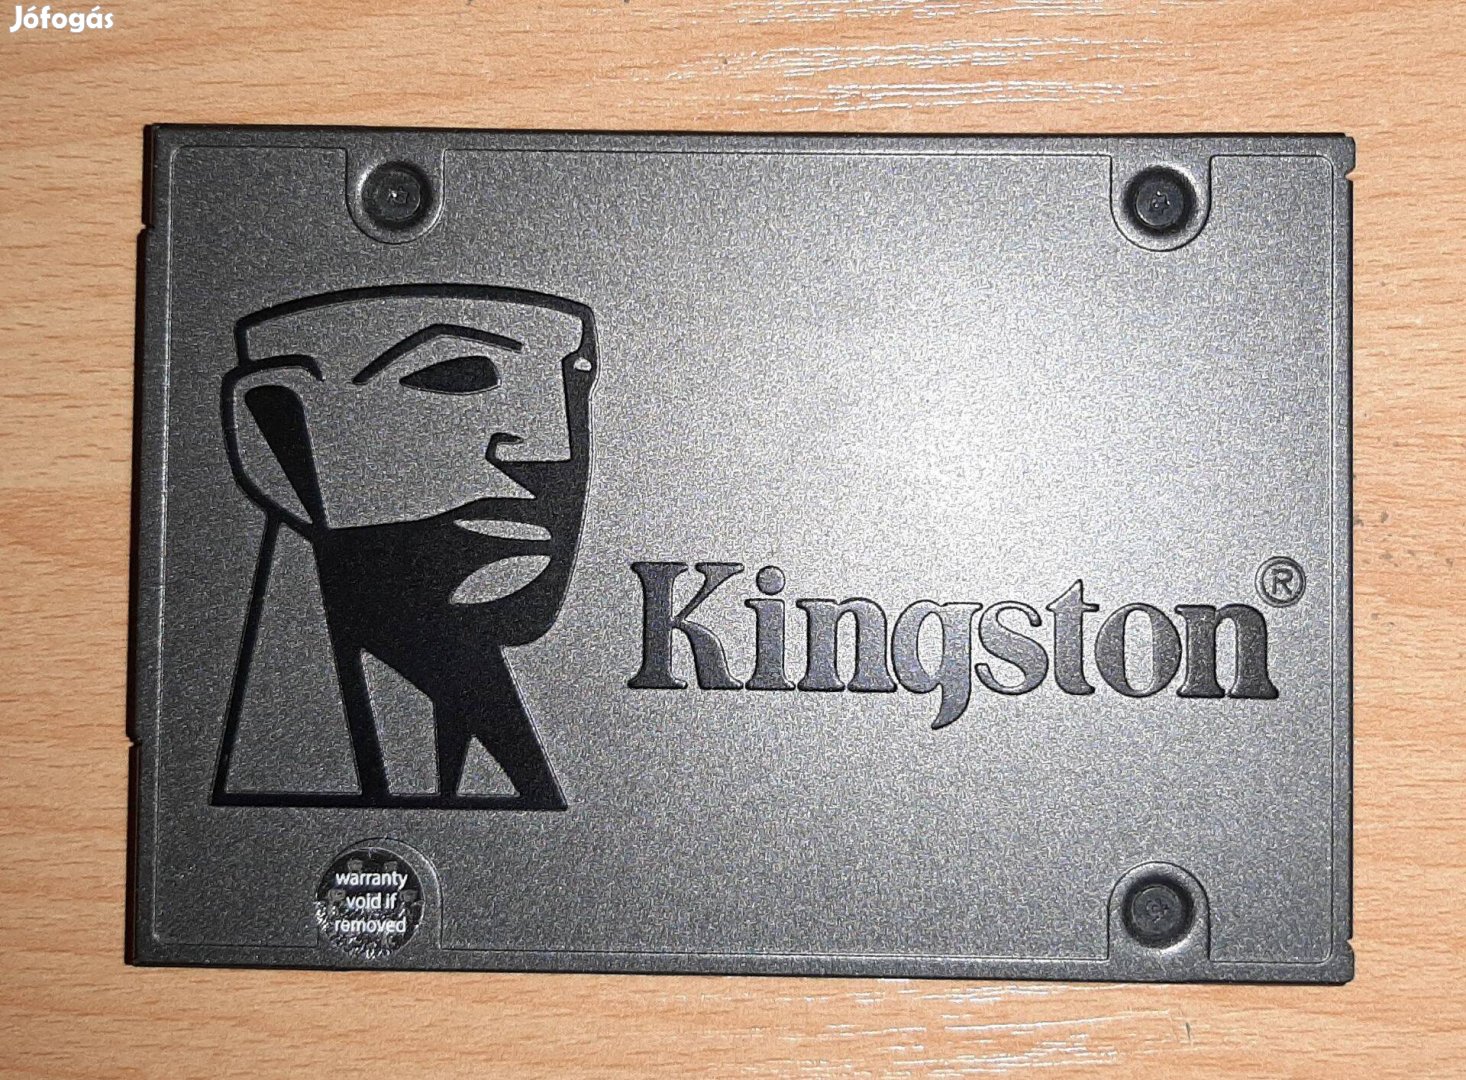 Eladó Kingston 240G SSD